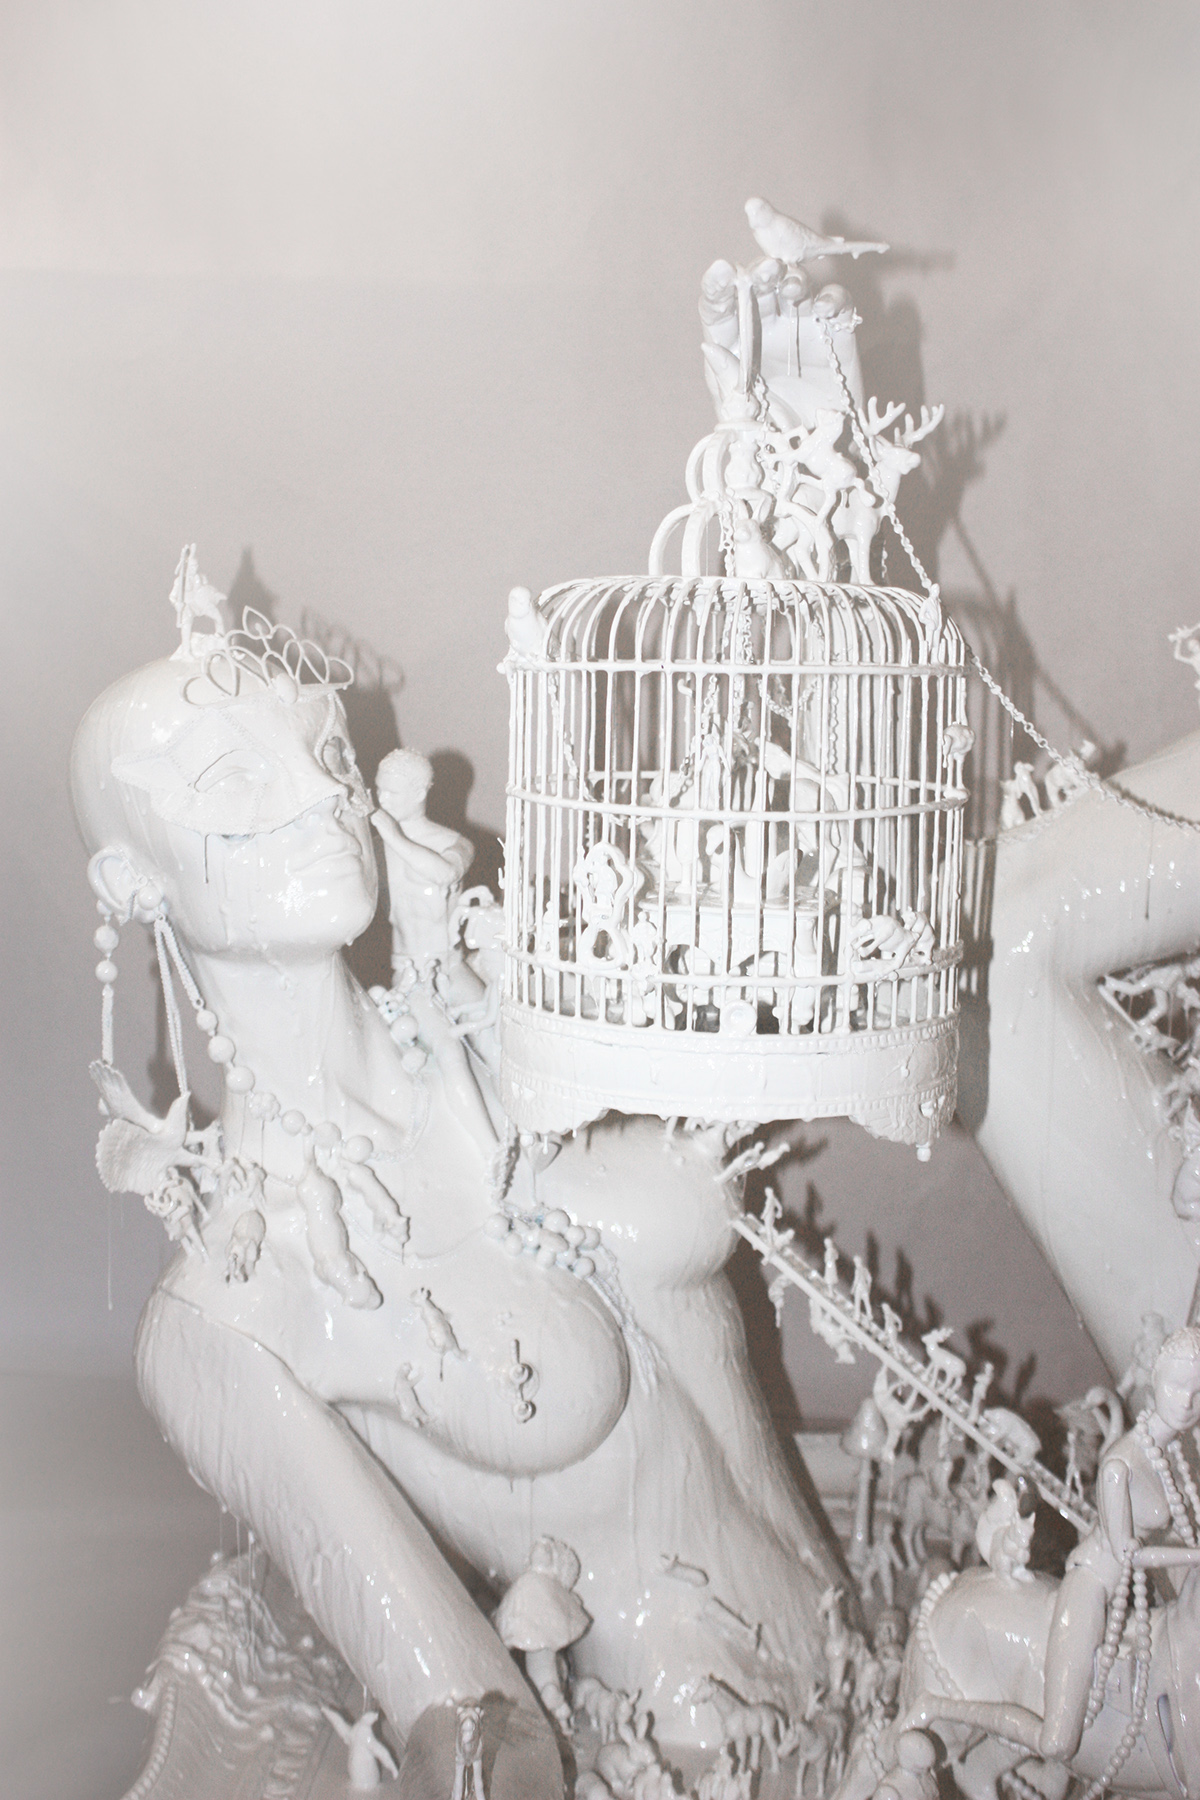 installation graphic design art sculpture elegant White desires emotions animals luxury Nature London Hong Kong